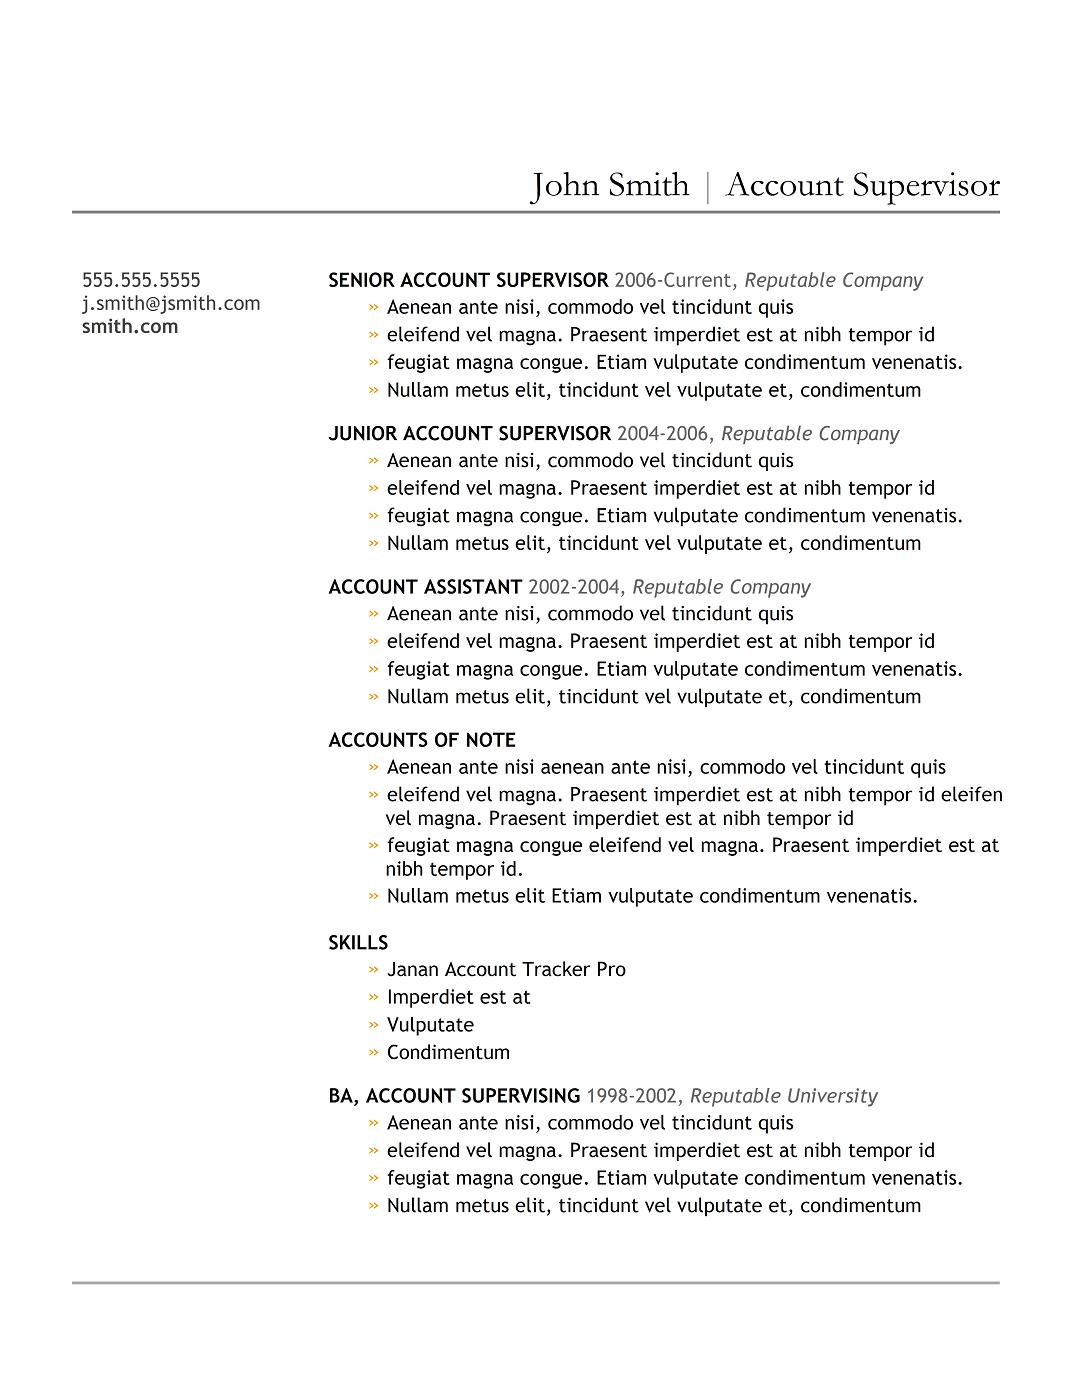 Resume for an external auditor